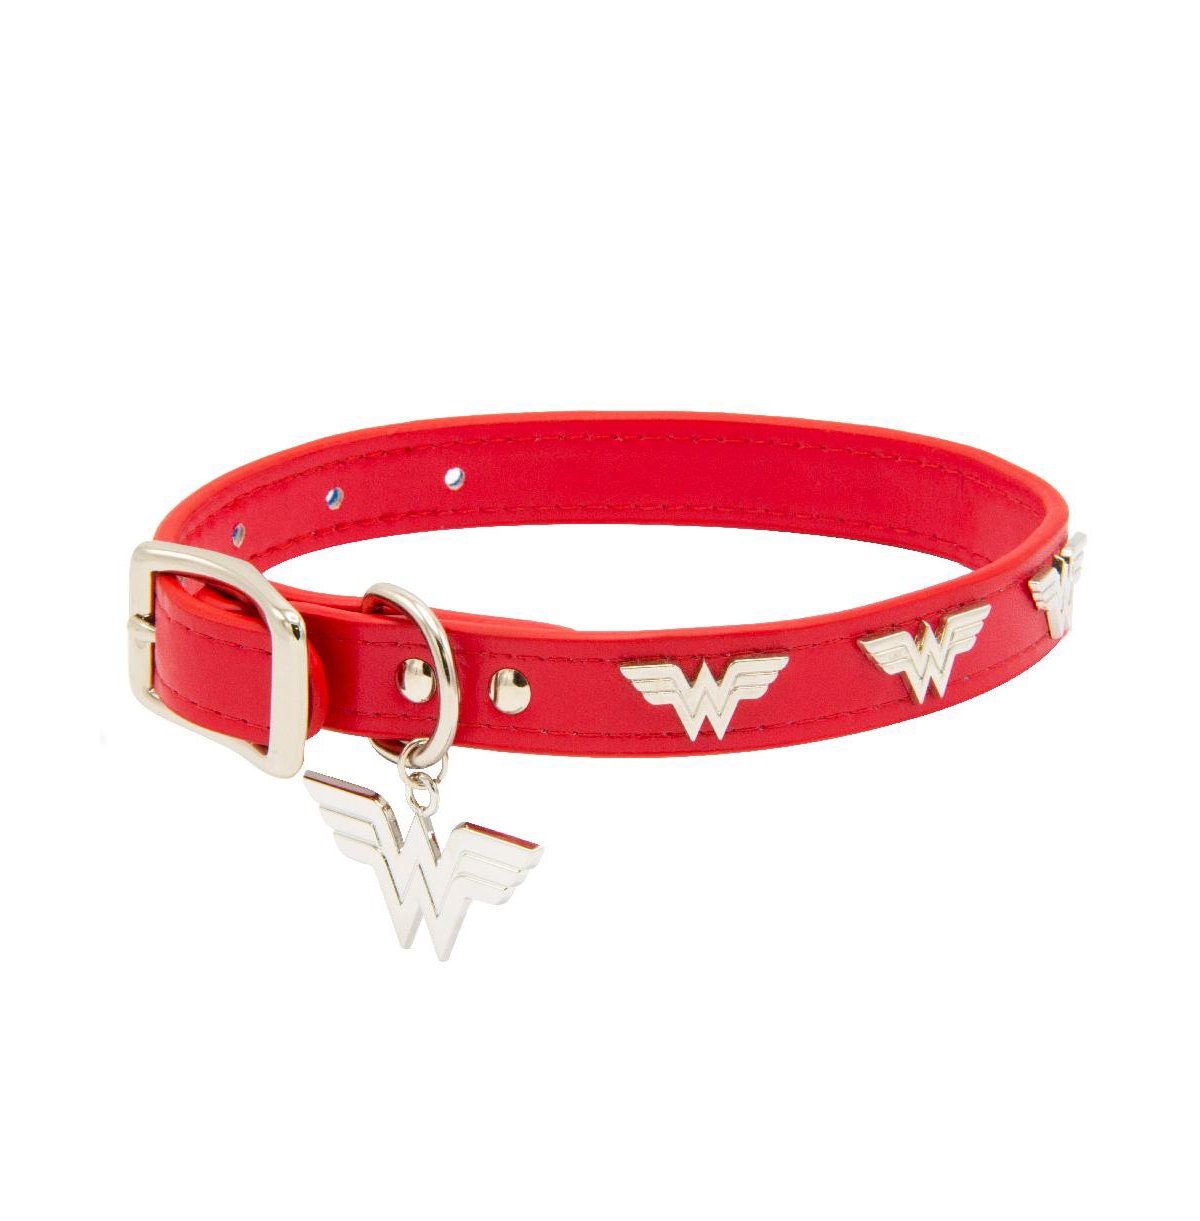 Dc Comics Pet Collar, Faux Leather Dog Collar, Wonder Woman - Red